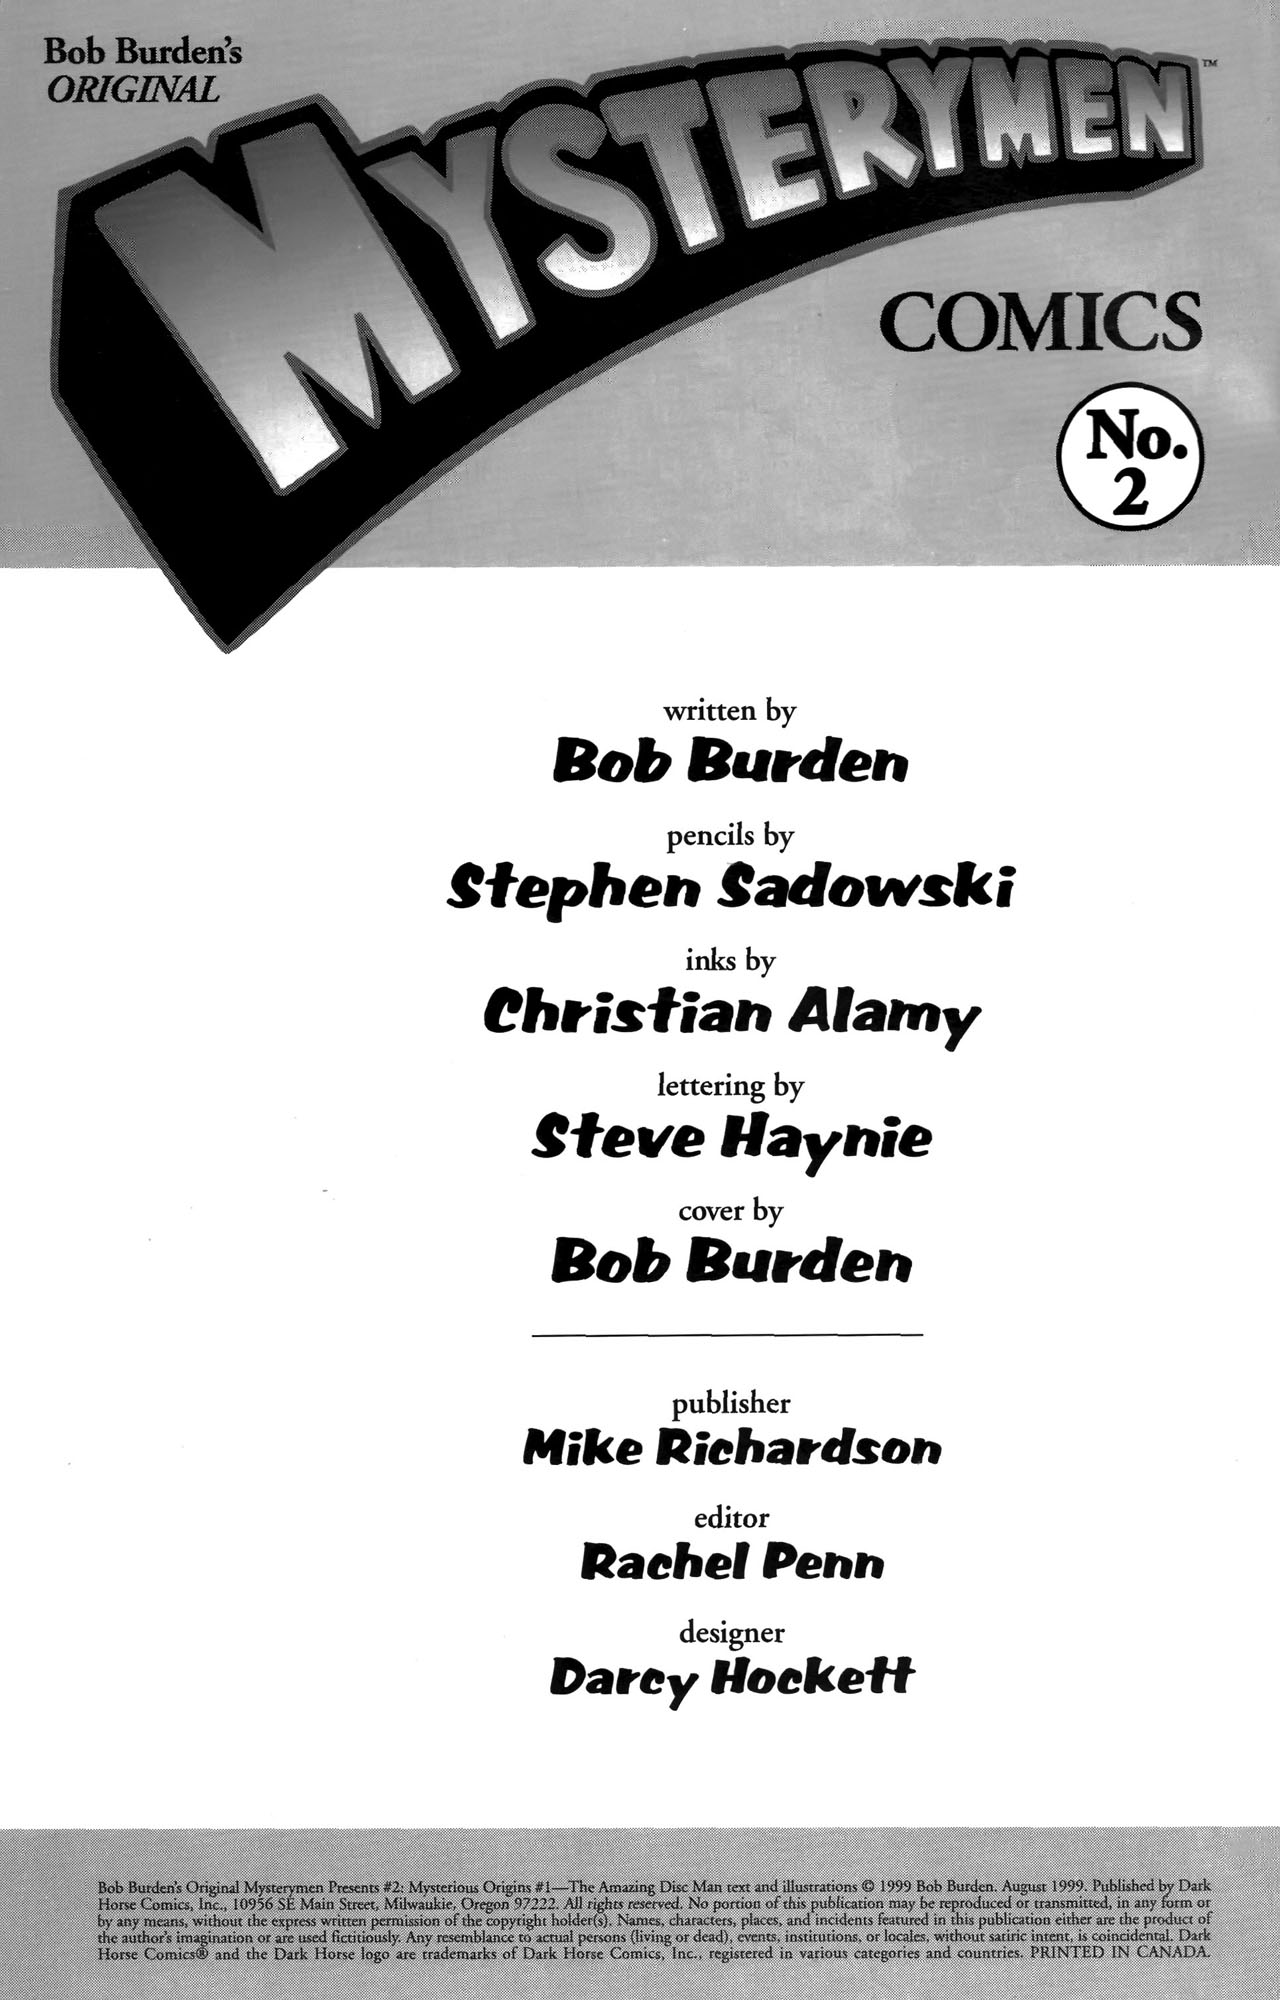 Read online Bob Burden's Original Mysterymen Comics comic -  Issue #2 - 2